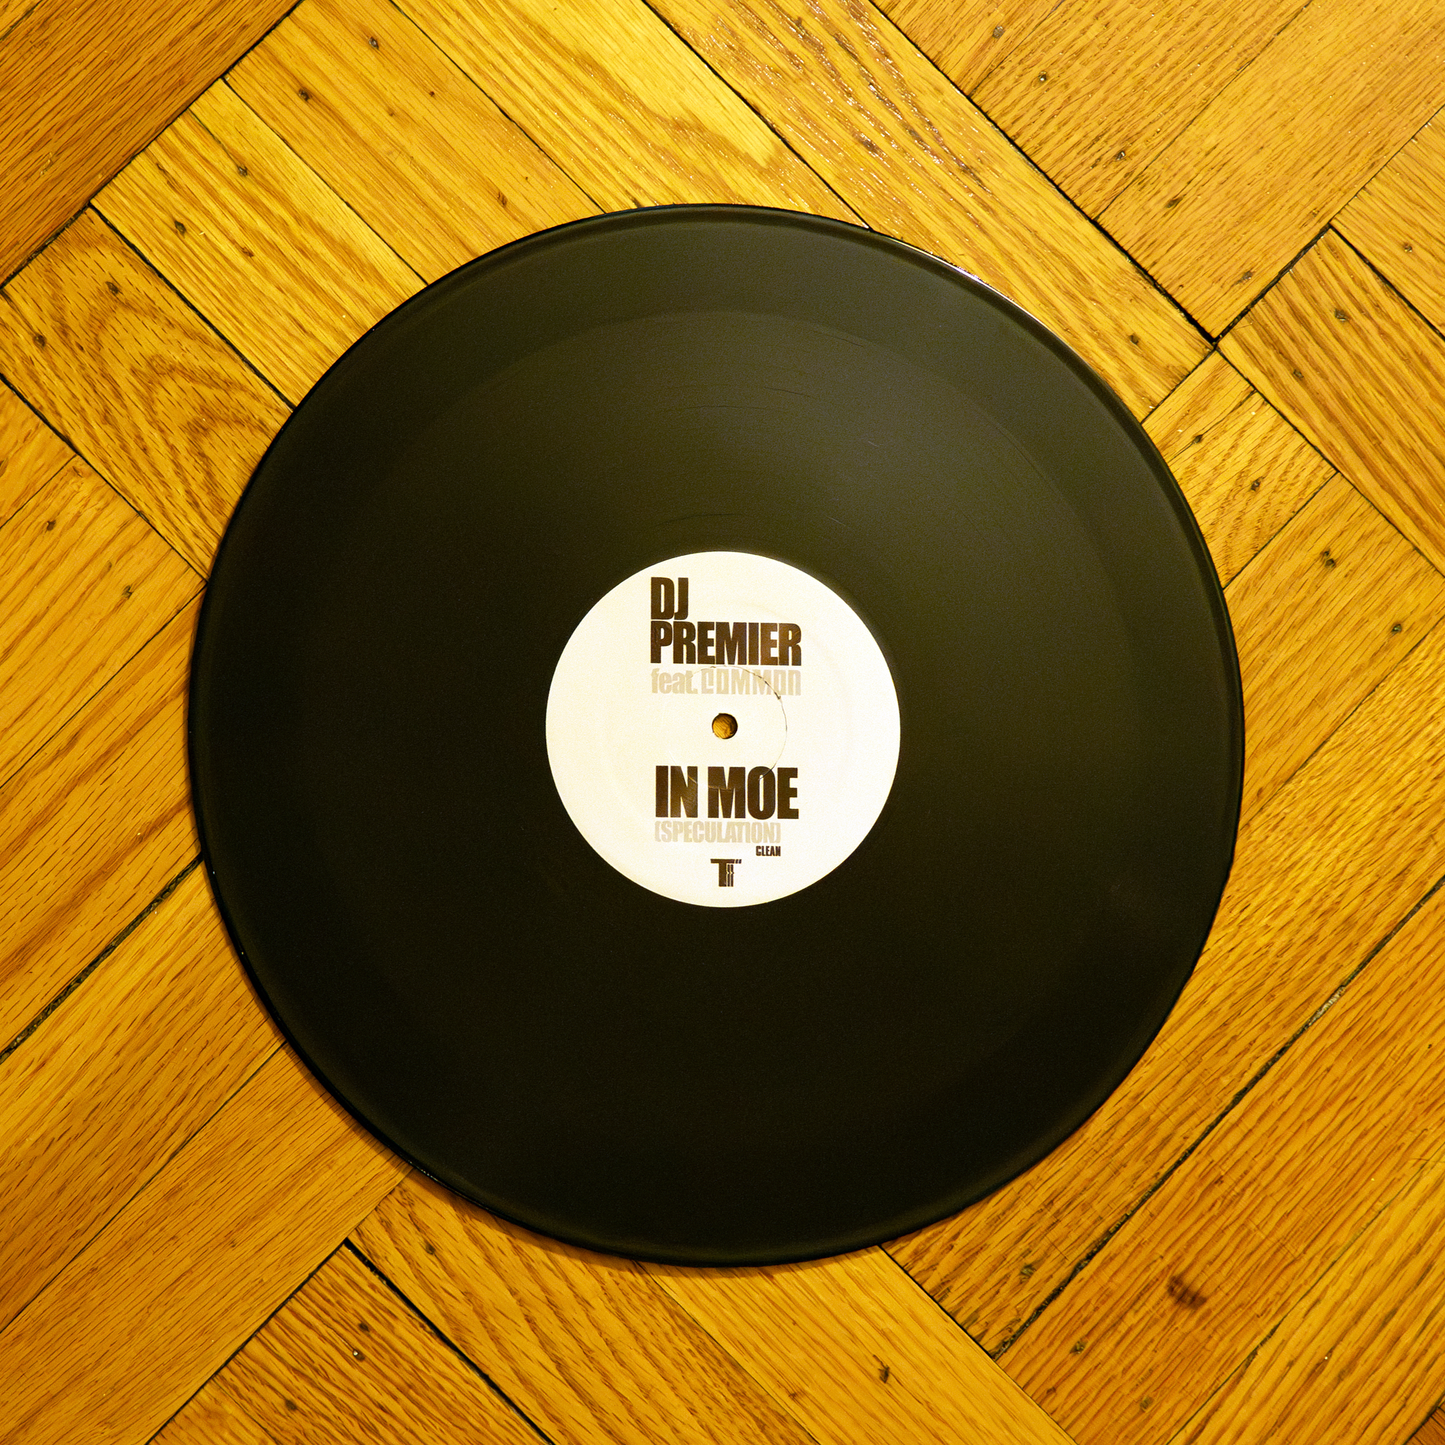 DJ Premier x Common - "In Moe" Limited Edition Vinyl